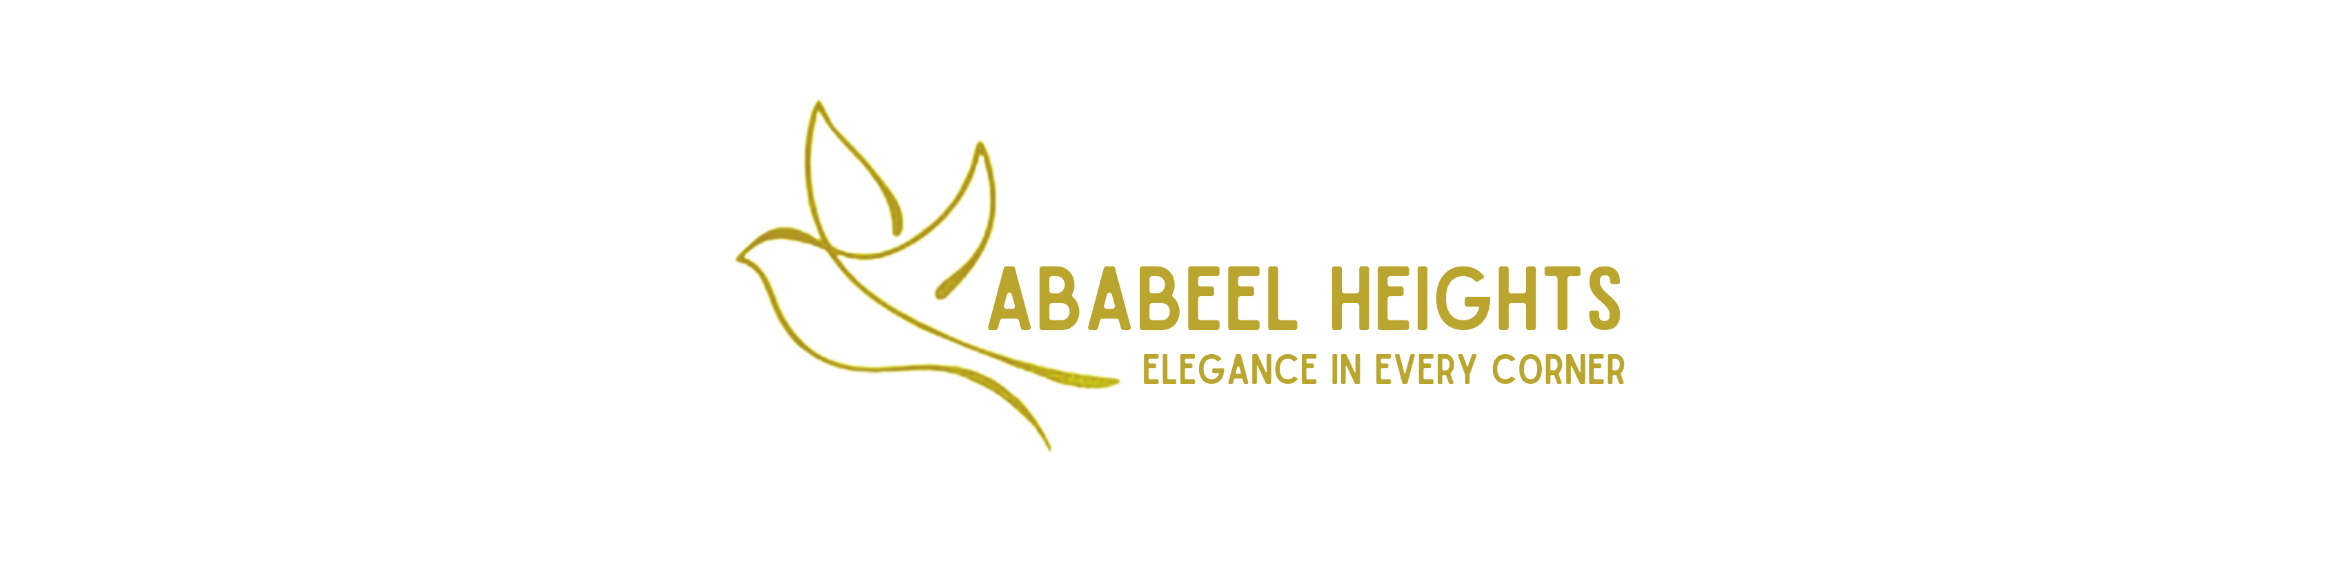 Ababeel Height